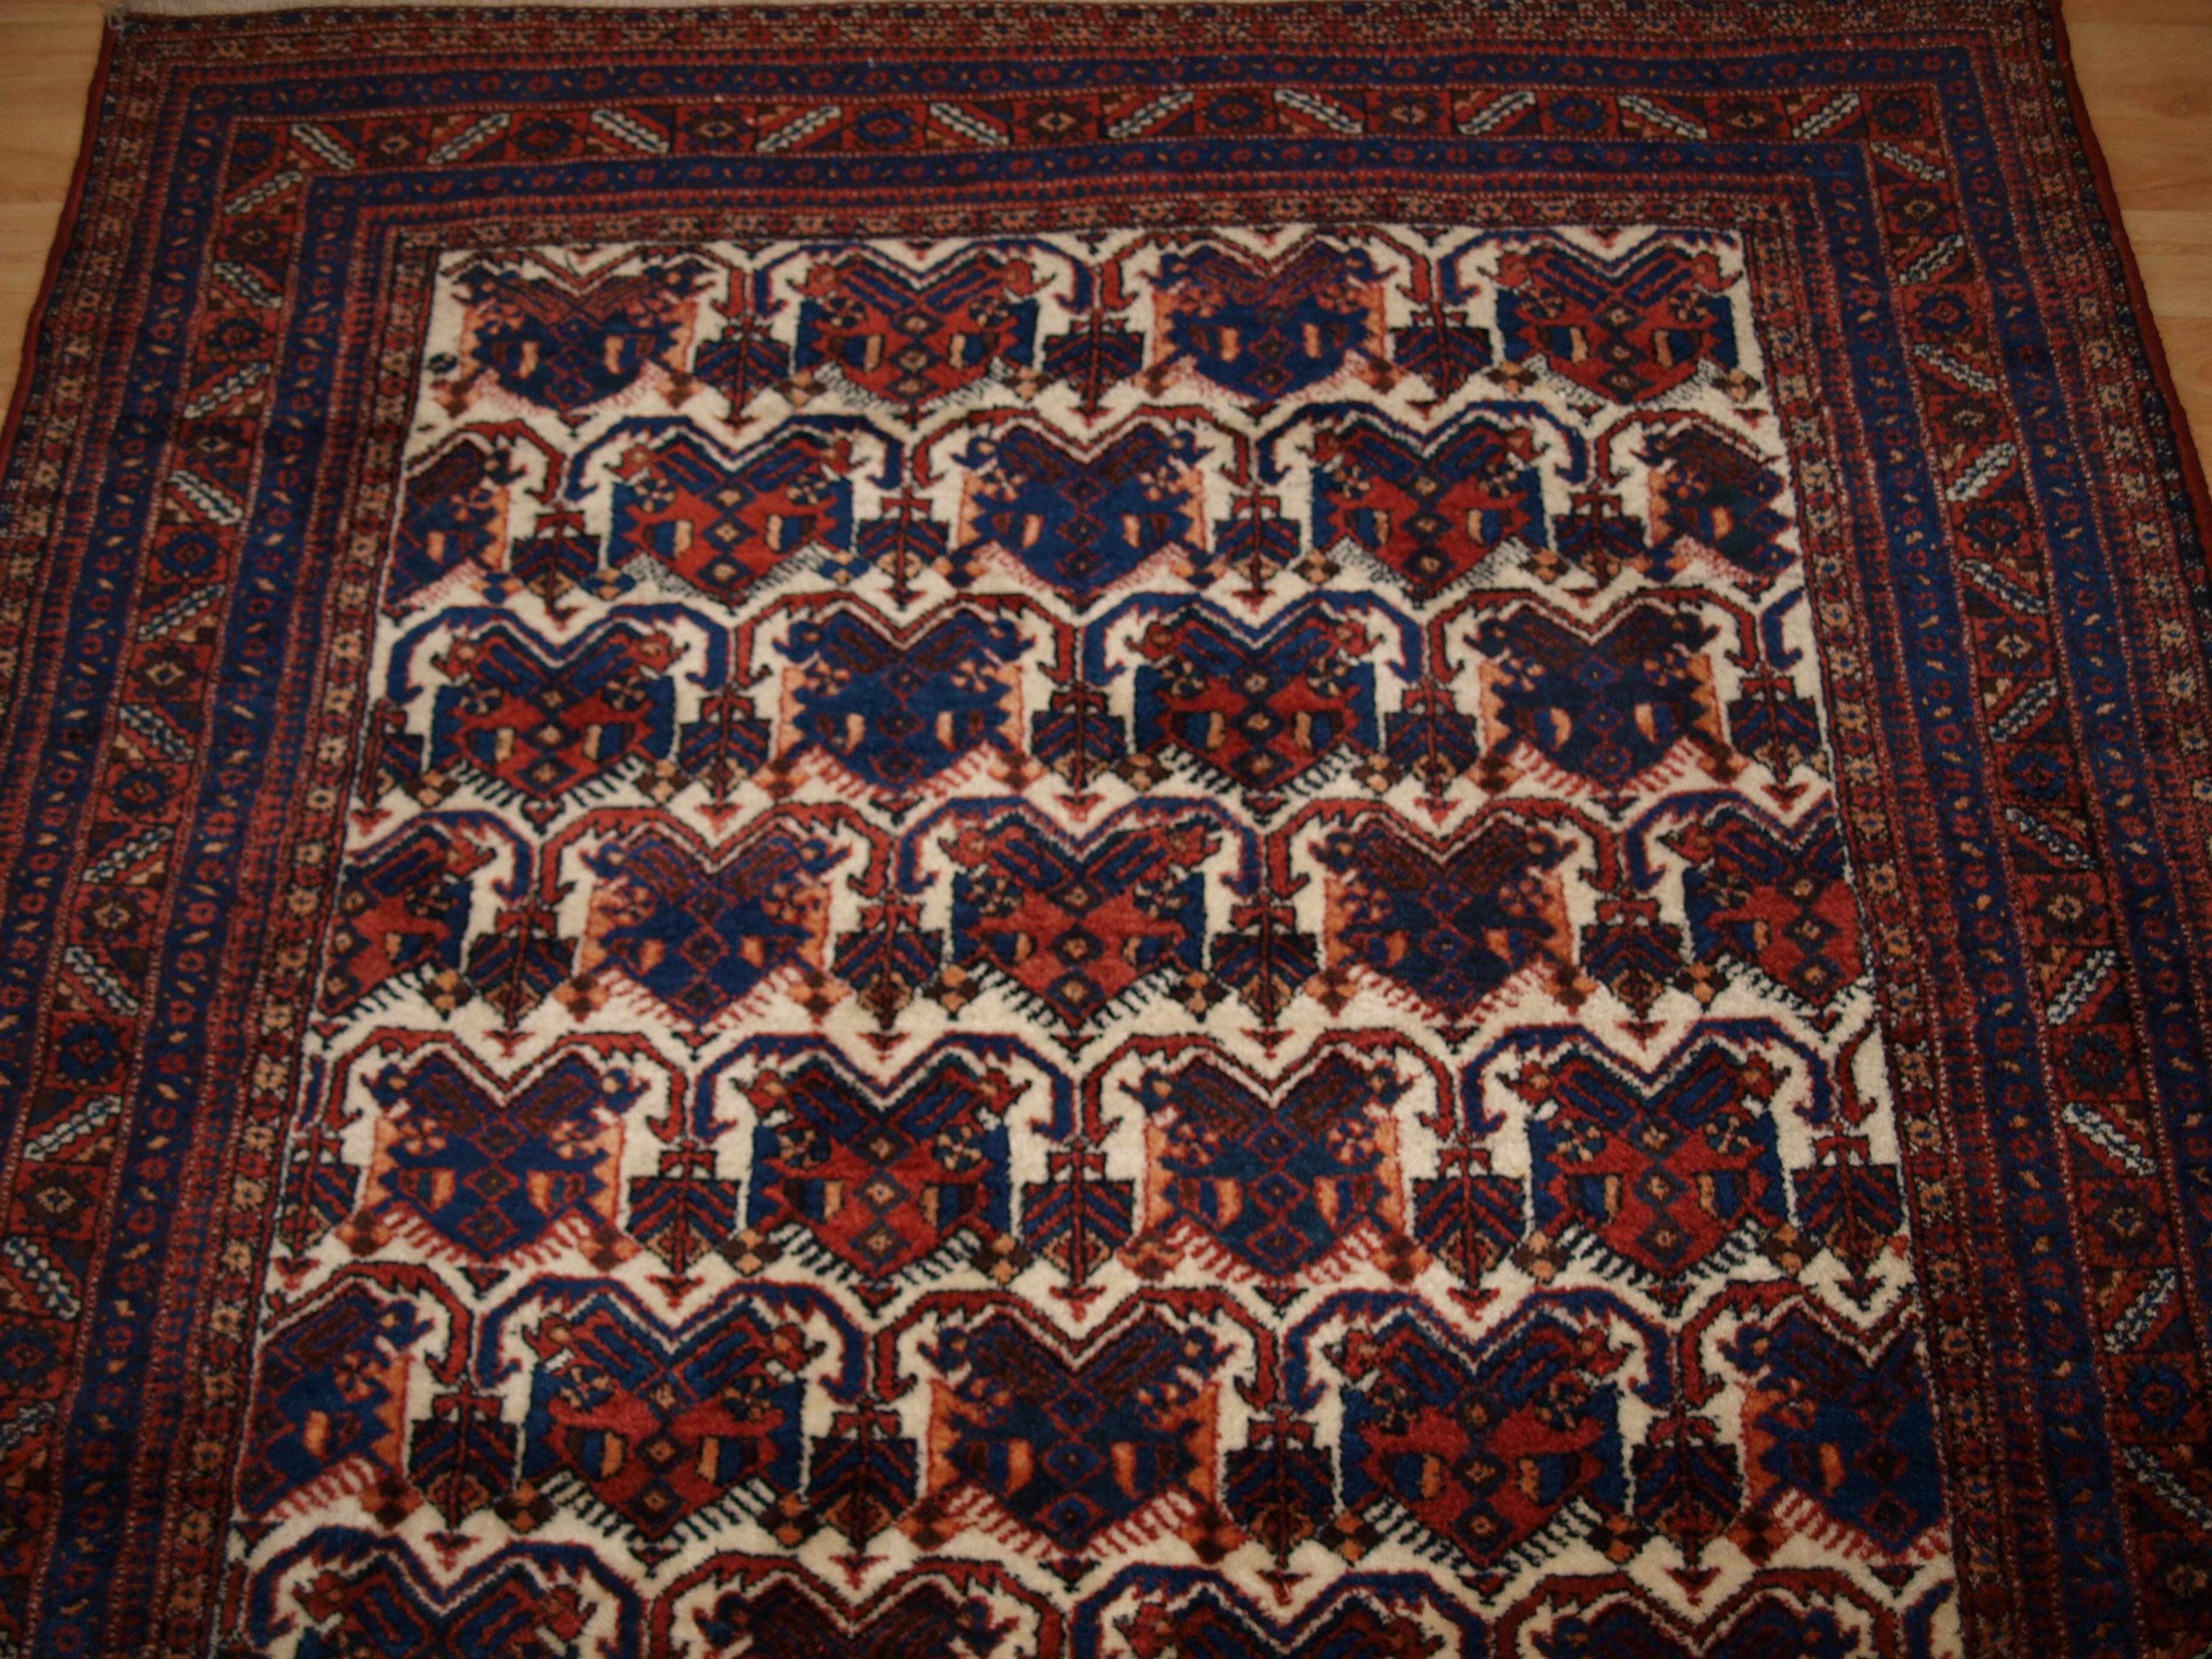 Patterned Carpet: The DOs & DONTs - The Carpet Workroom